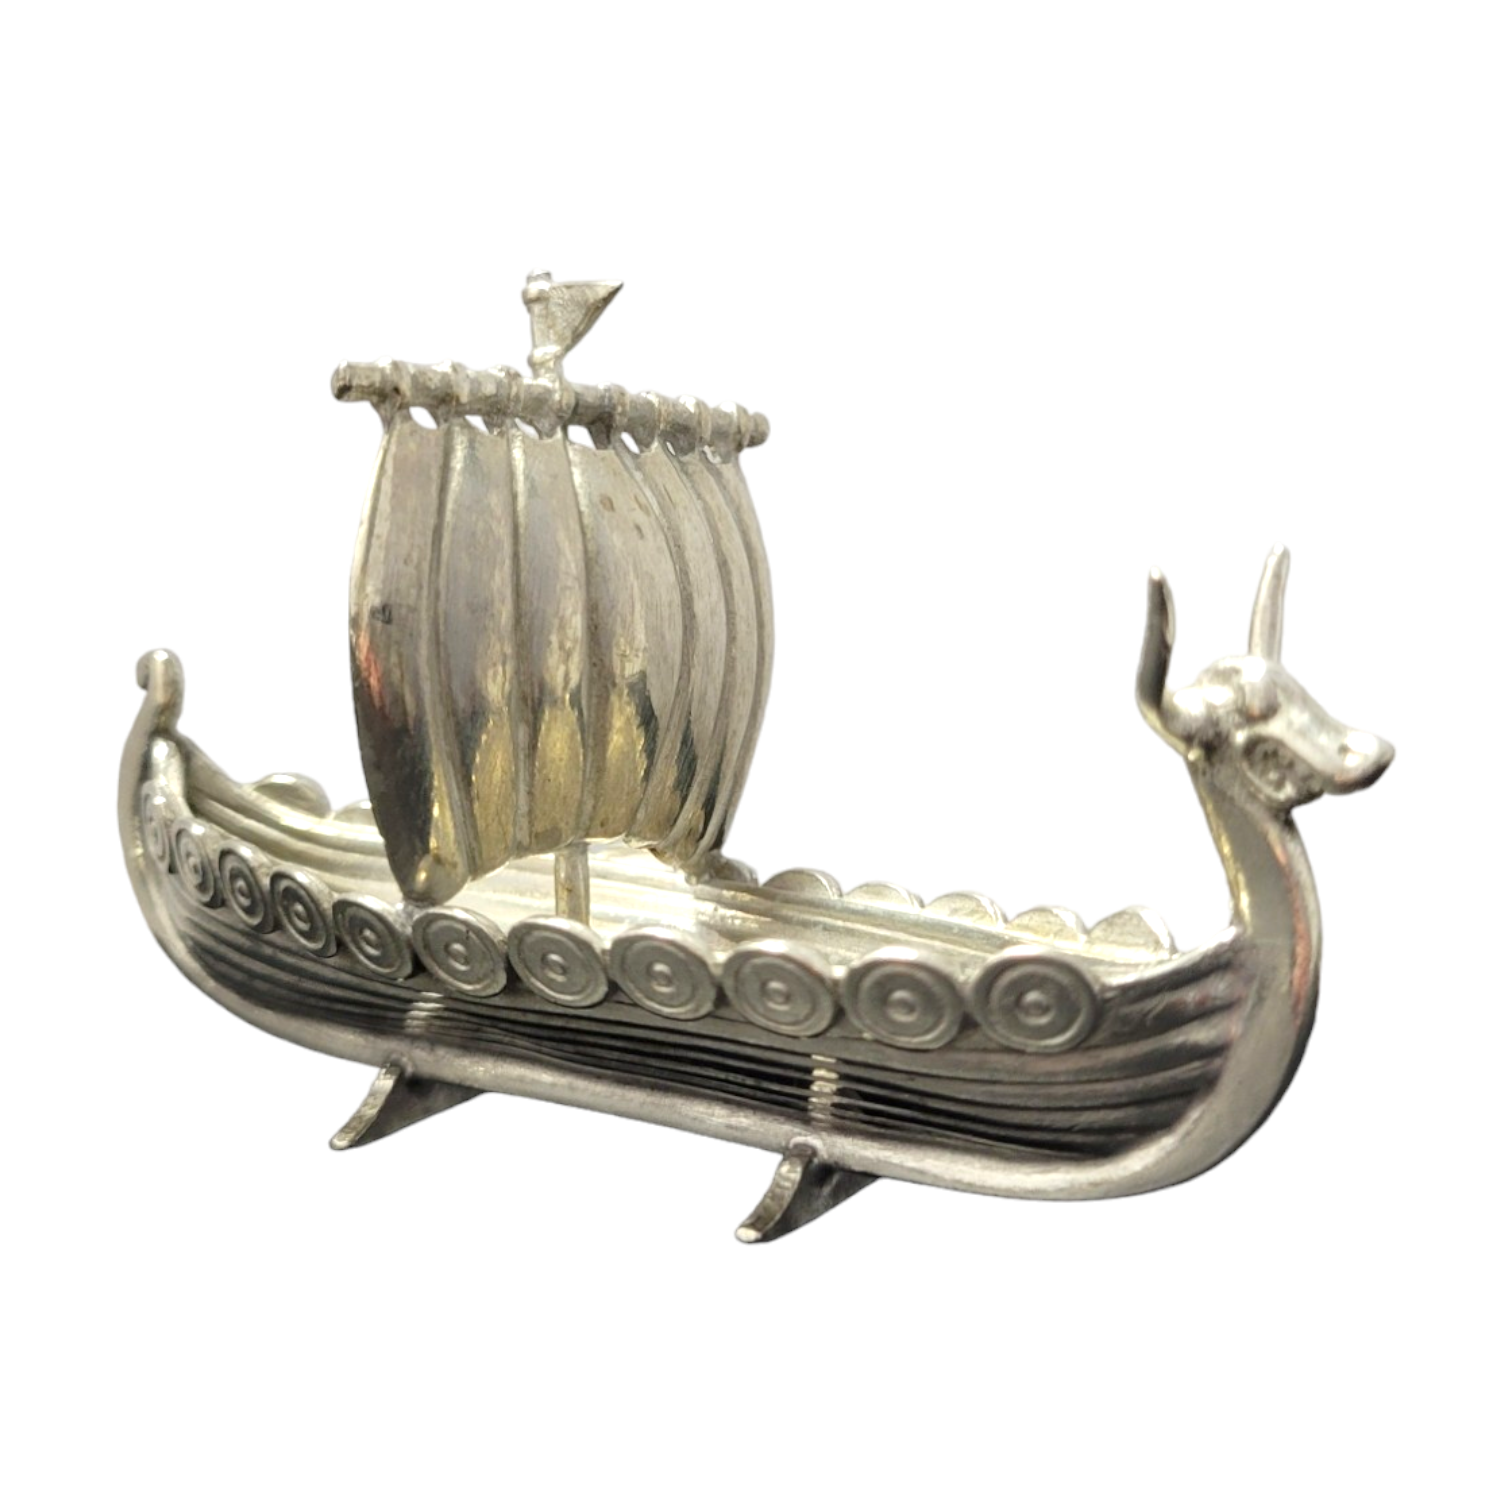 Figurine: Metal Viking Ship 4" x 2"